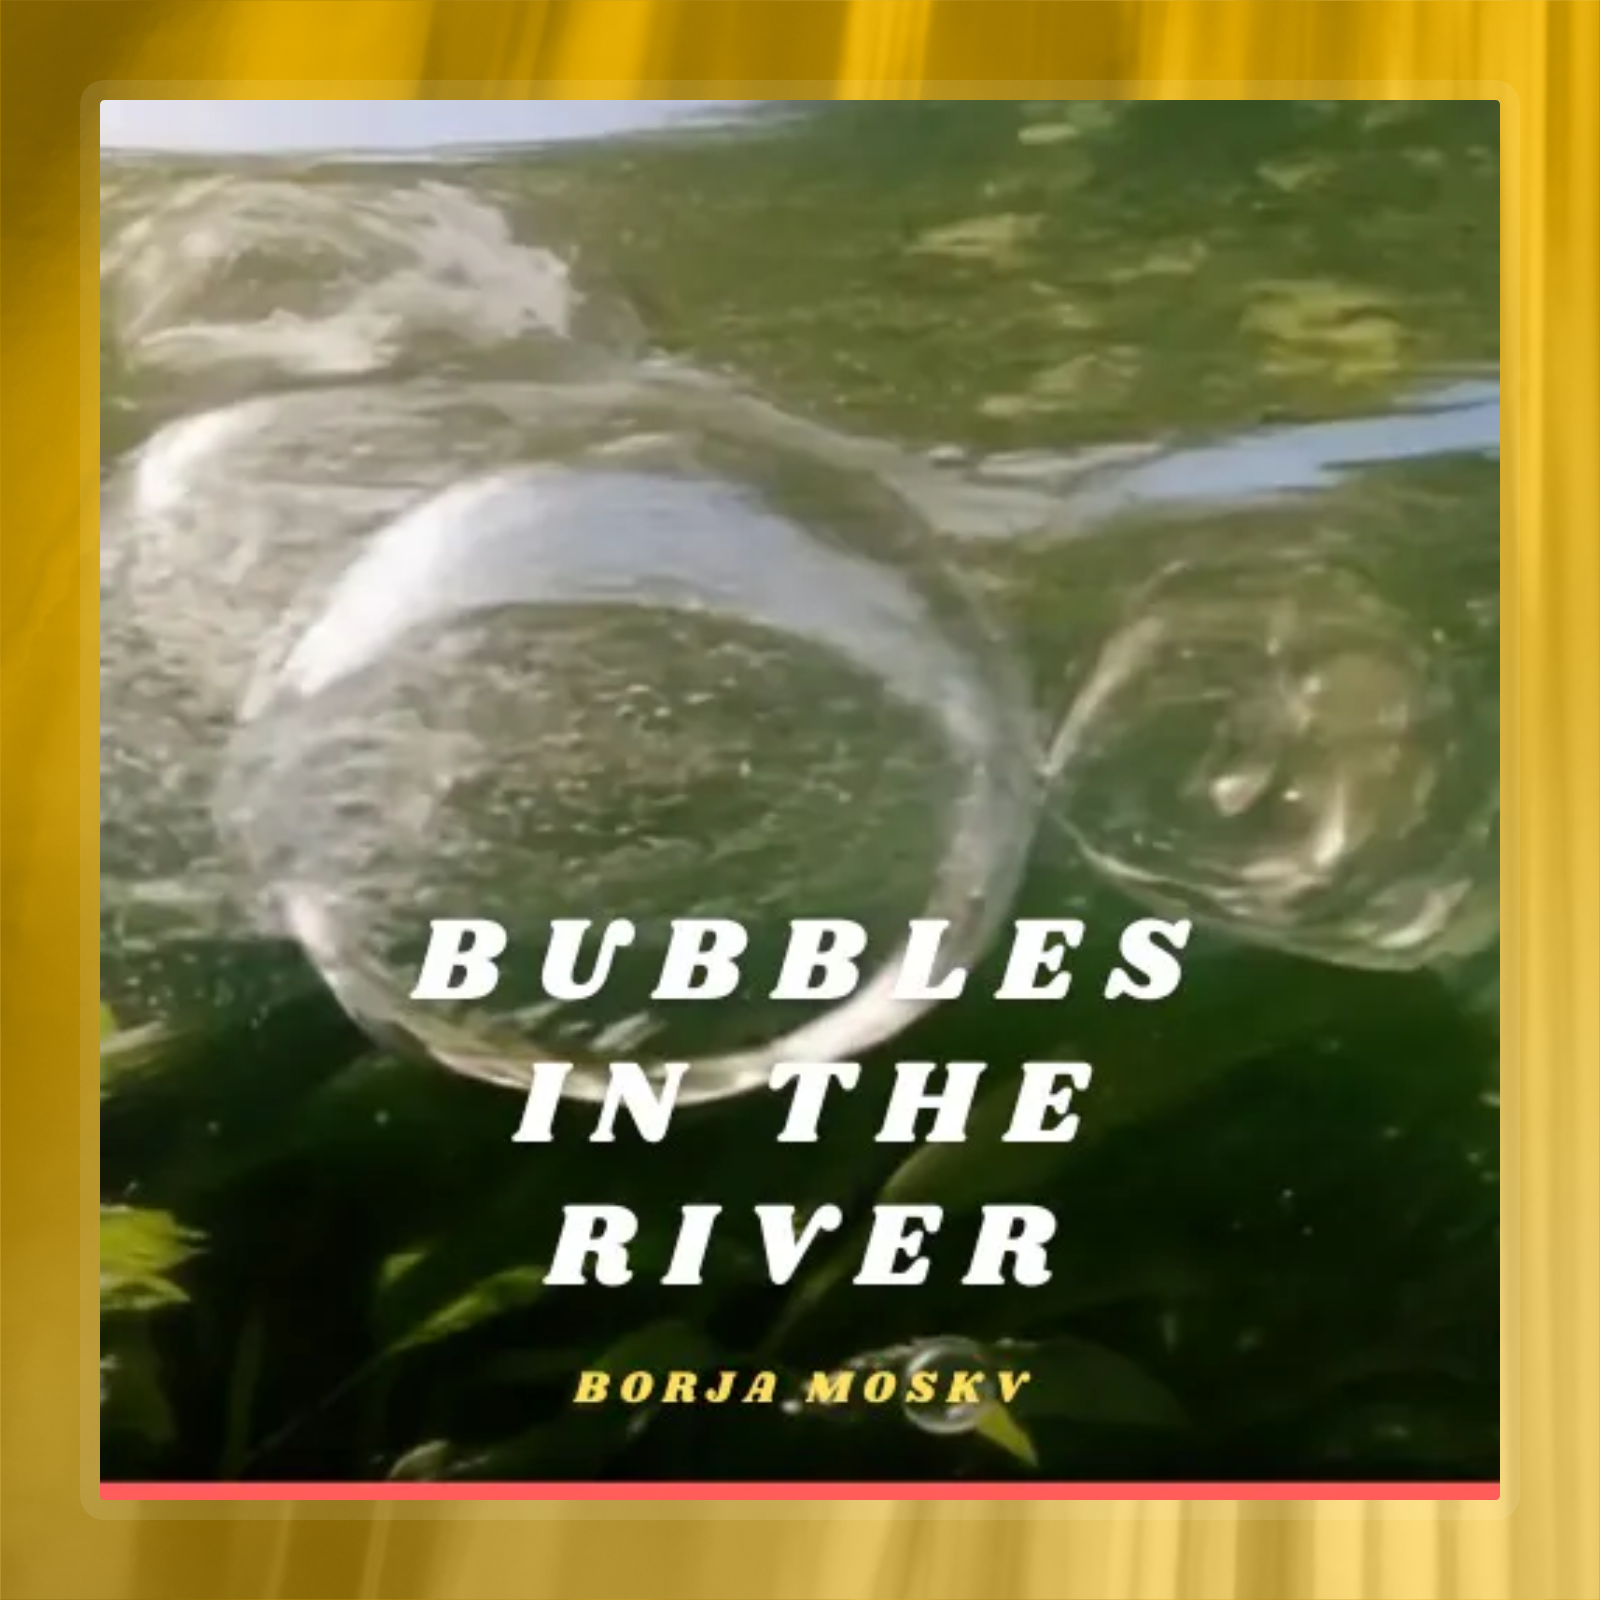 Bubbles in the river